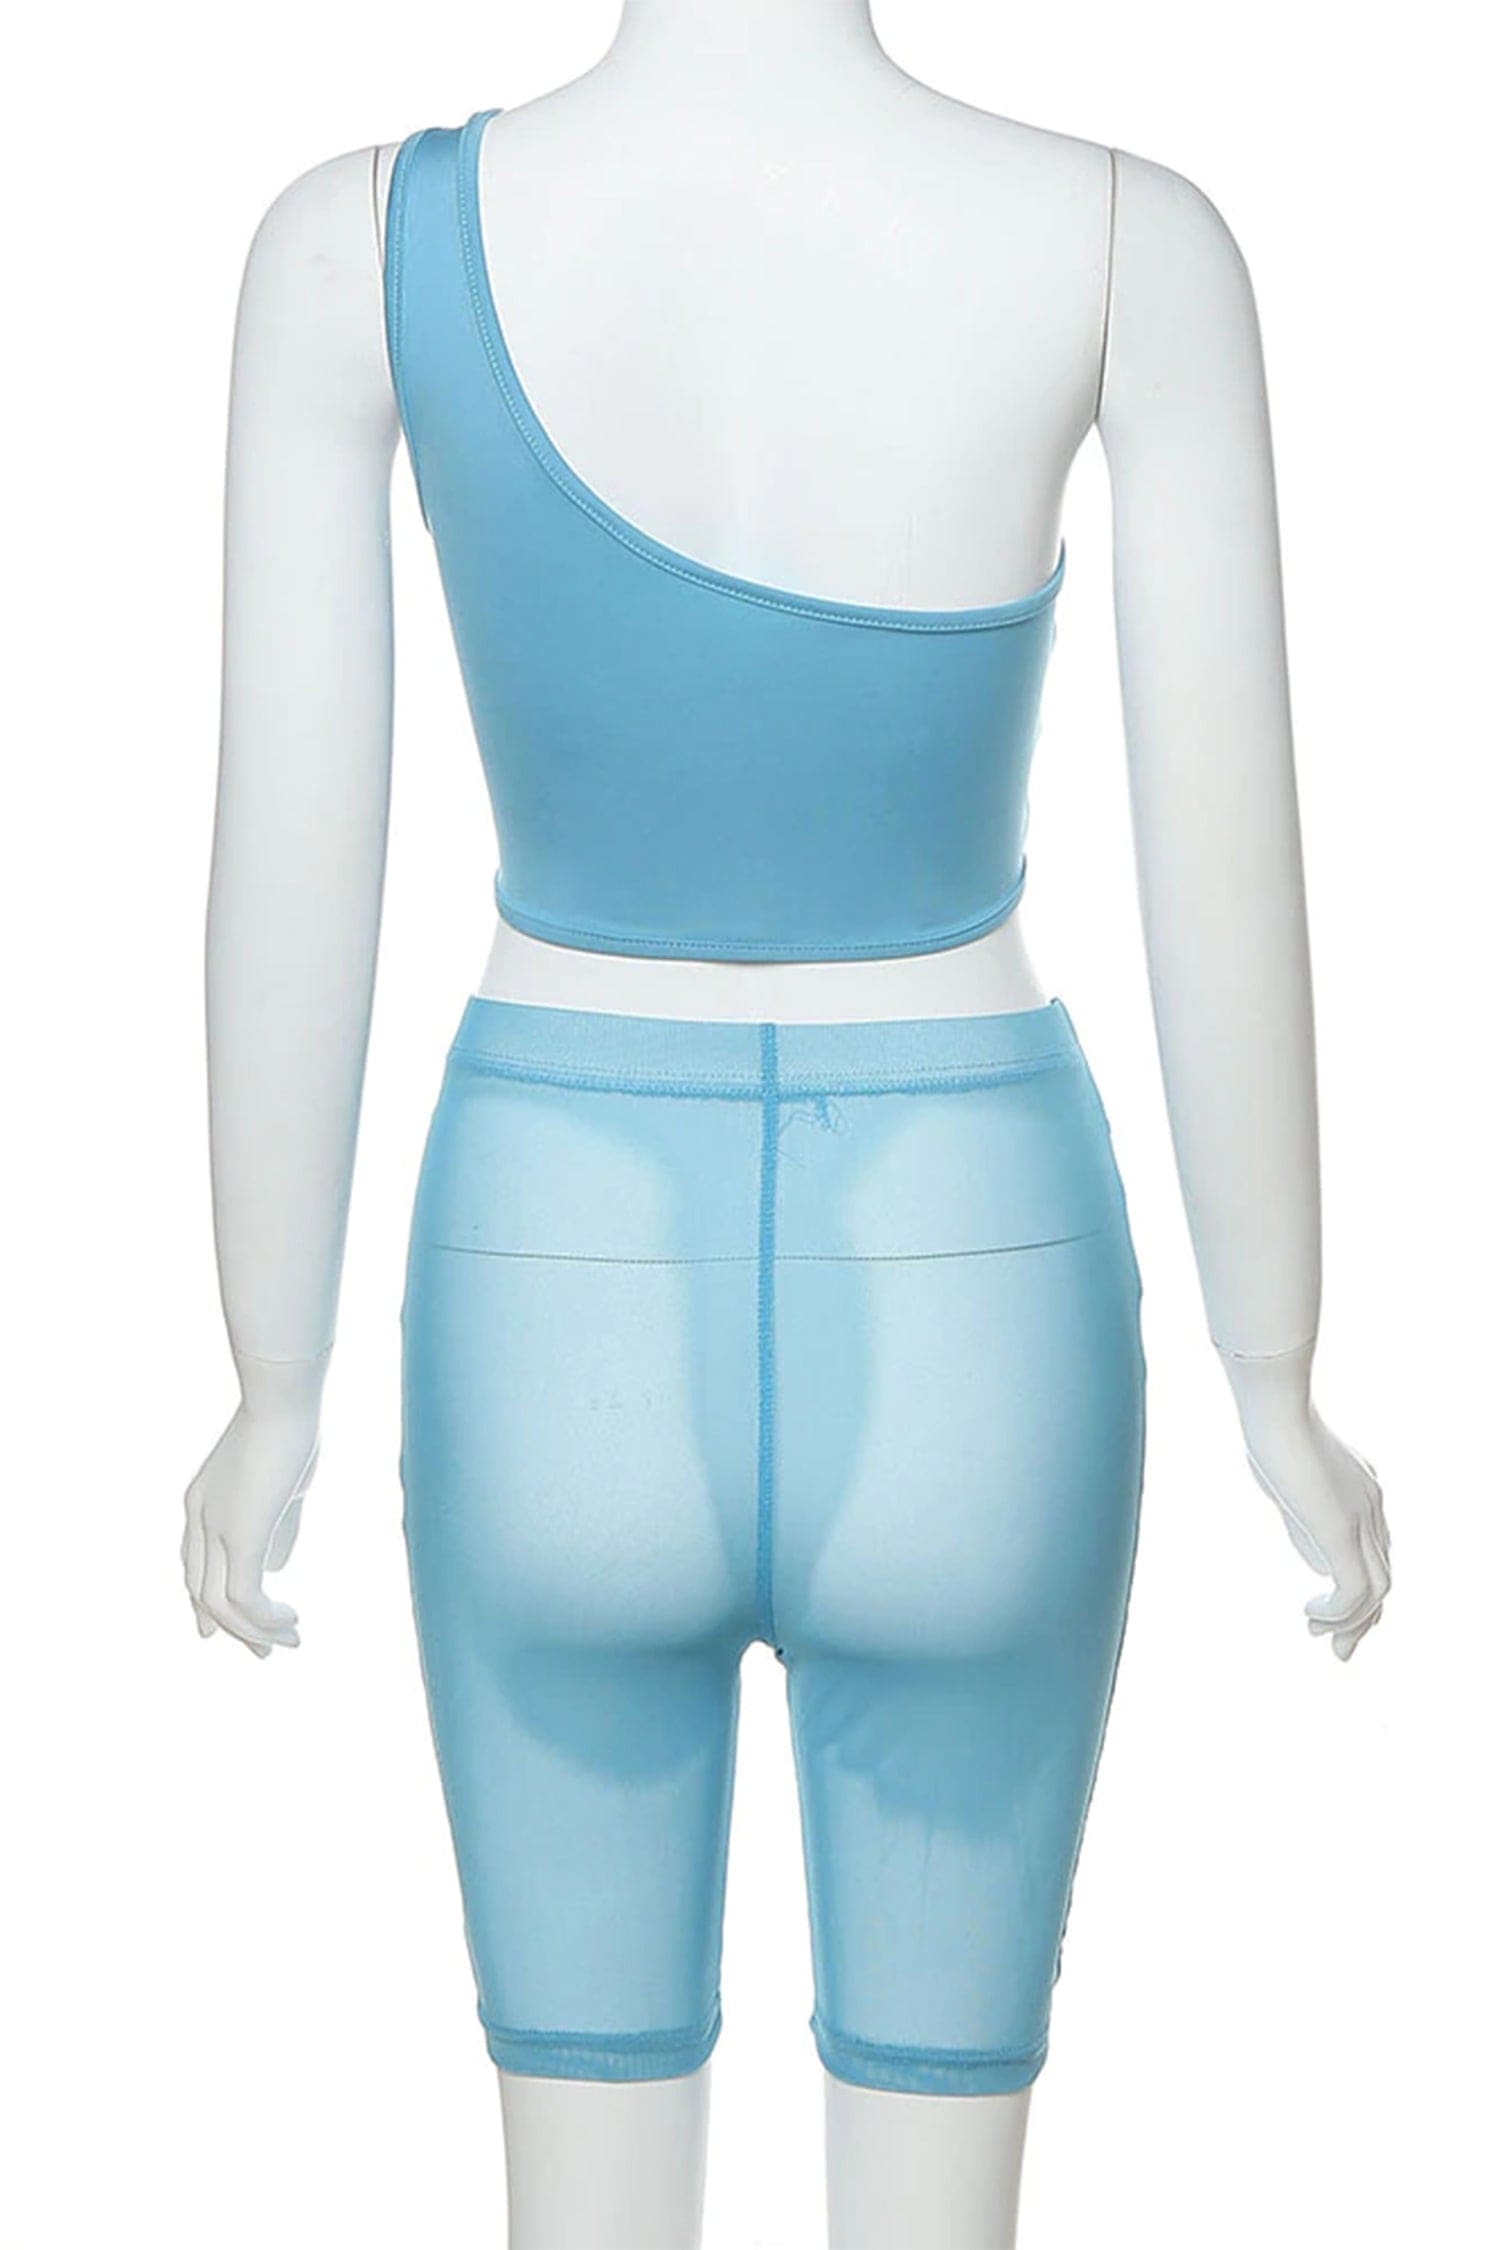 Blue Mesh Biker Shorts & One Shoulder Lace-Up Crop Top Set Outfit Sets